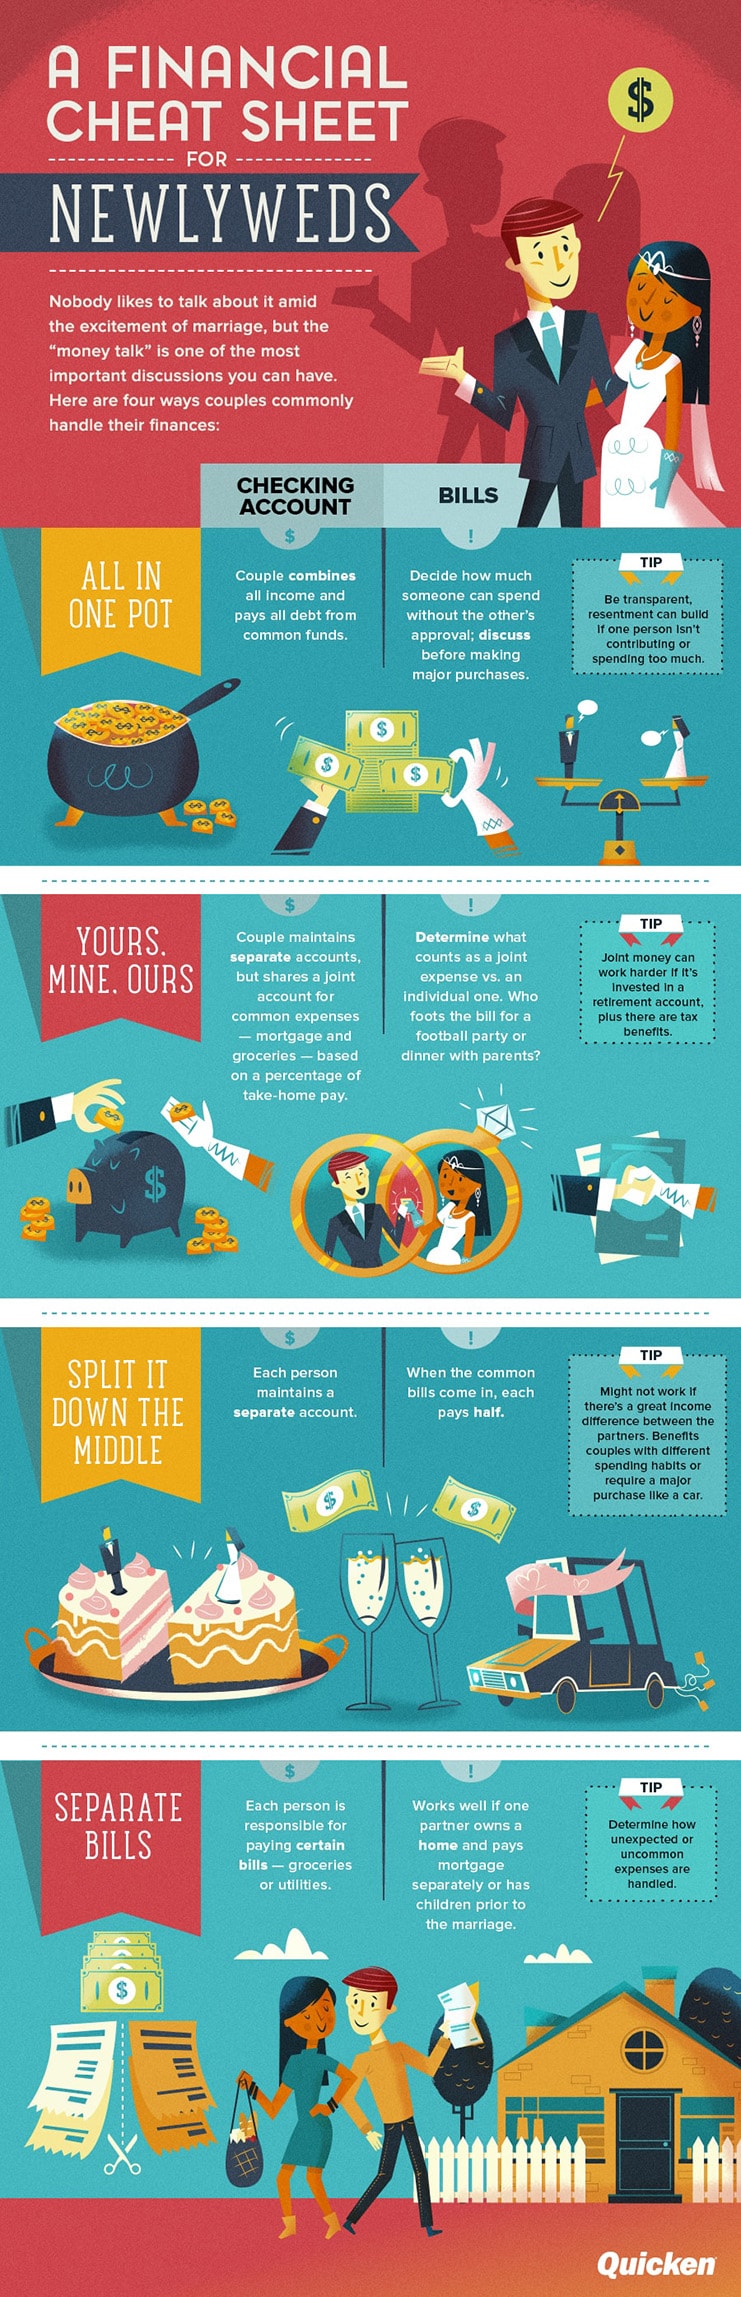 Financial Cheatsheet for Newlyweds Infographic